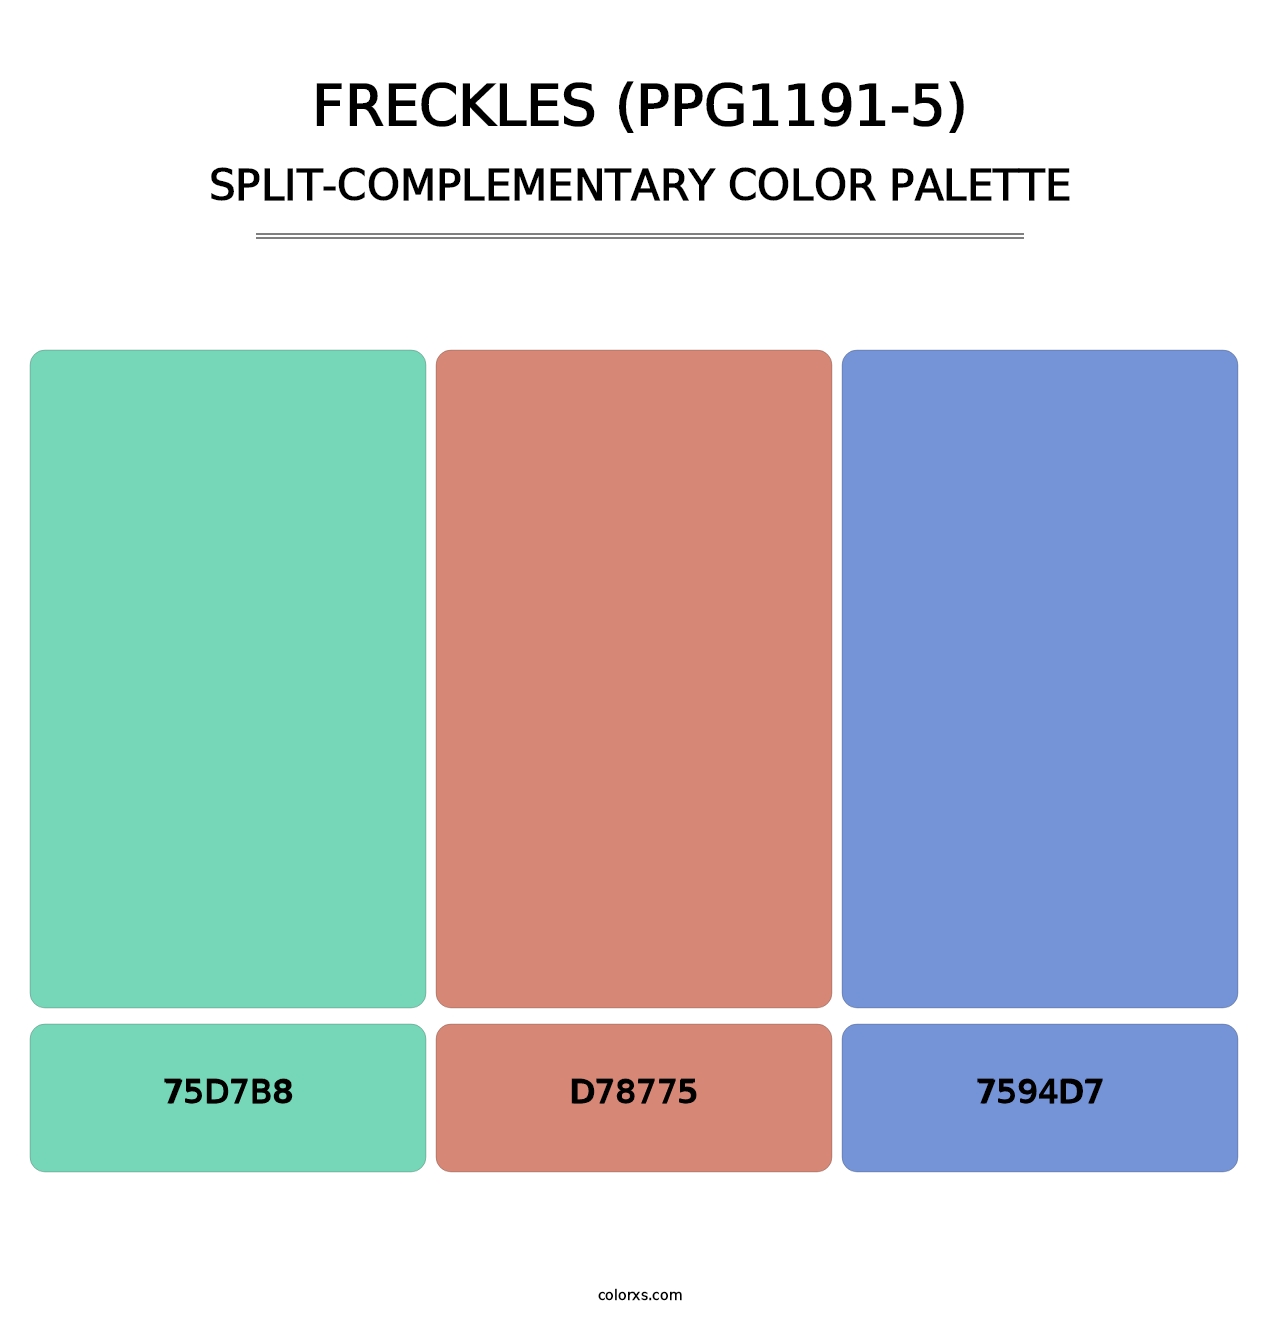 Freckles (PPG1191-5) - Split-Complementary Color Palette